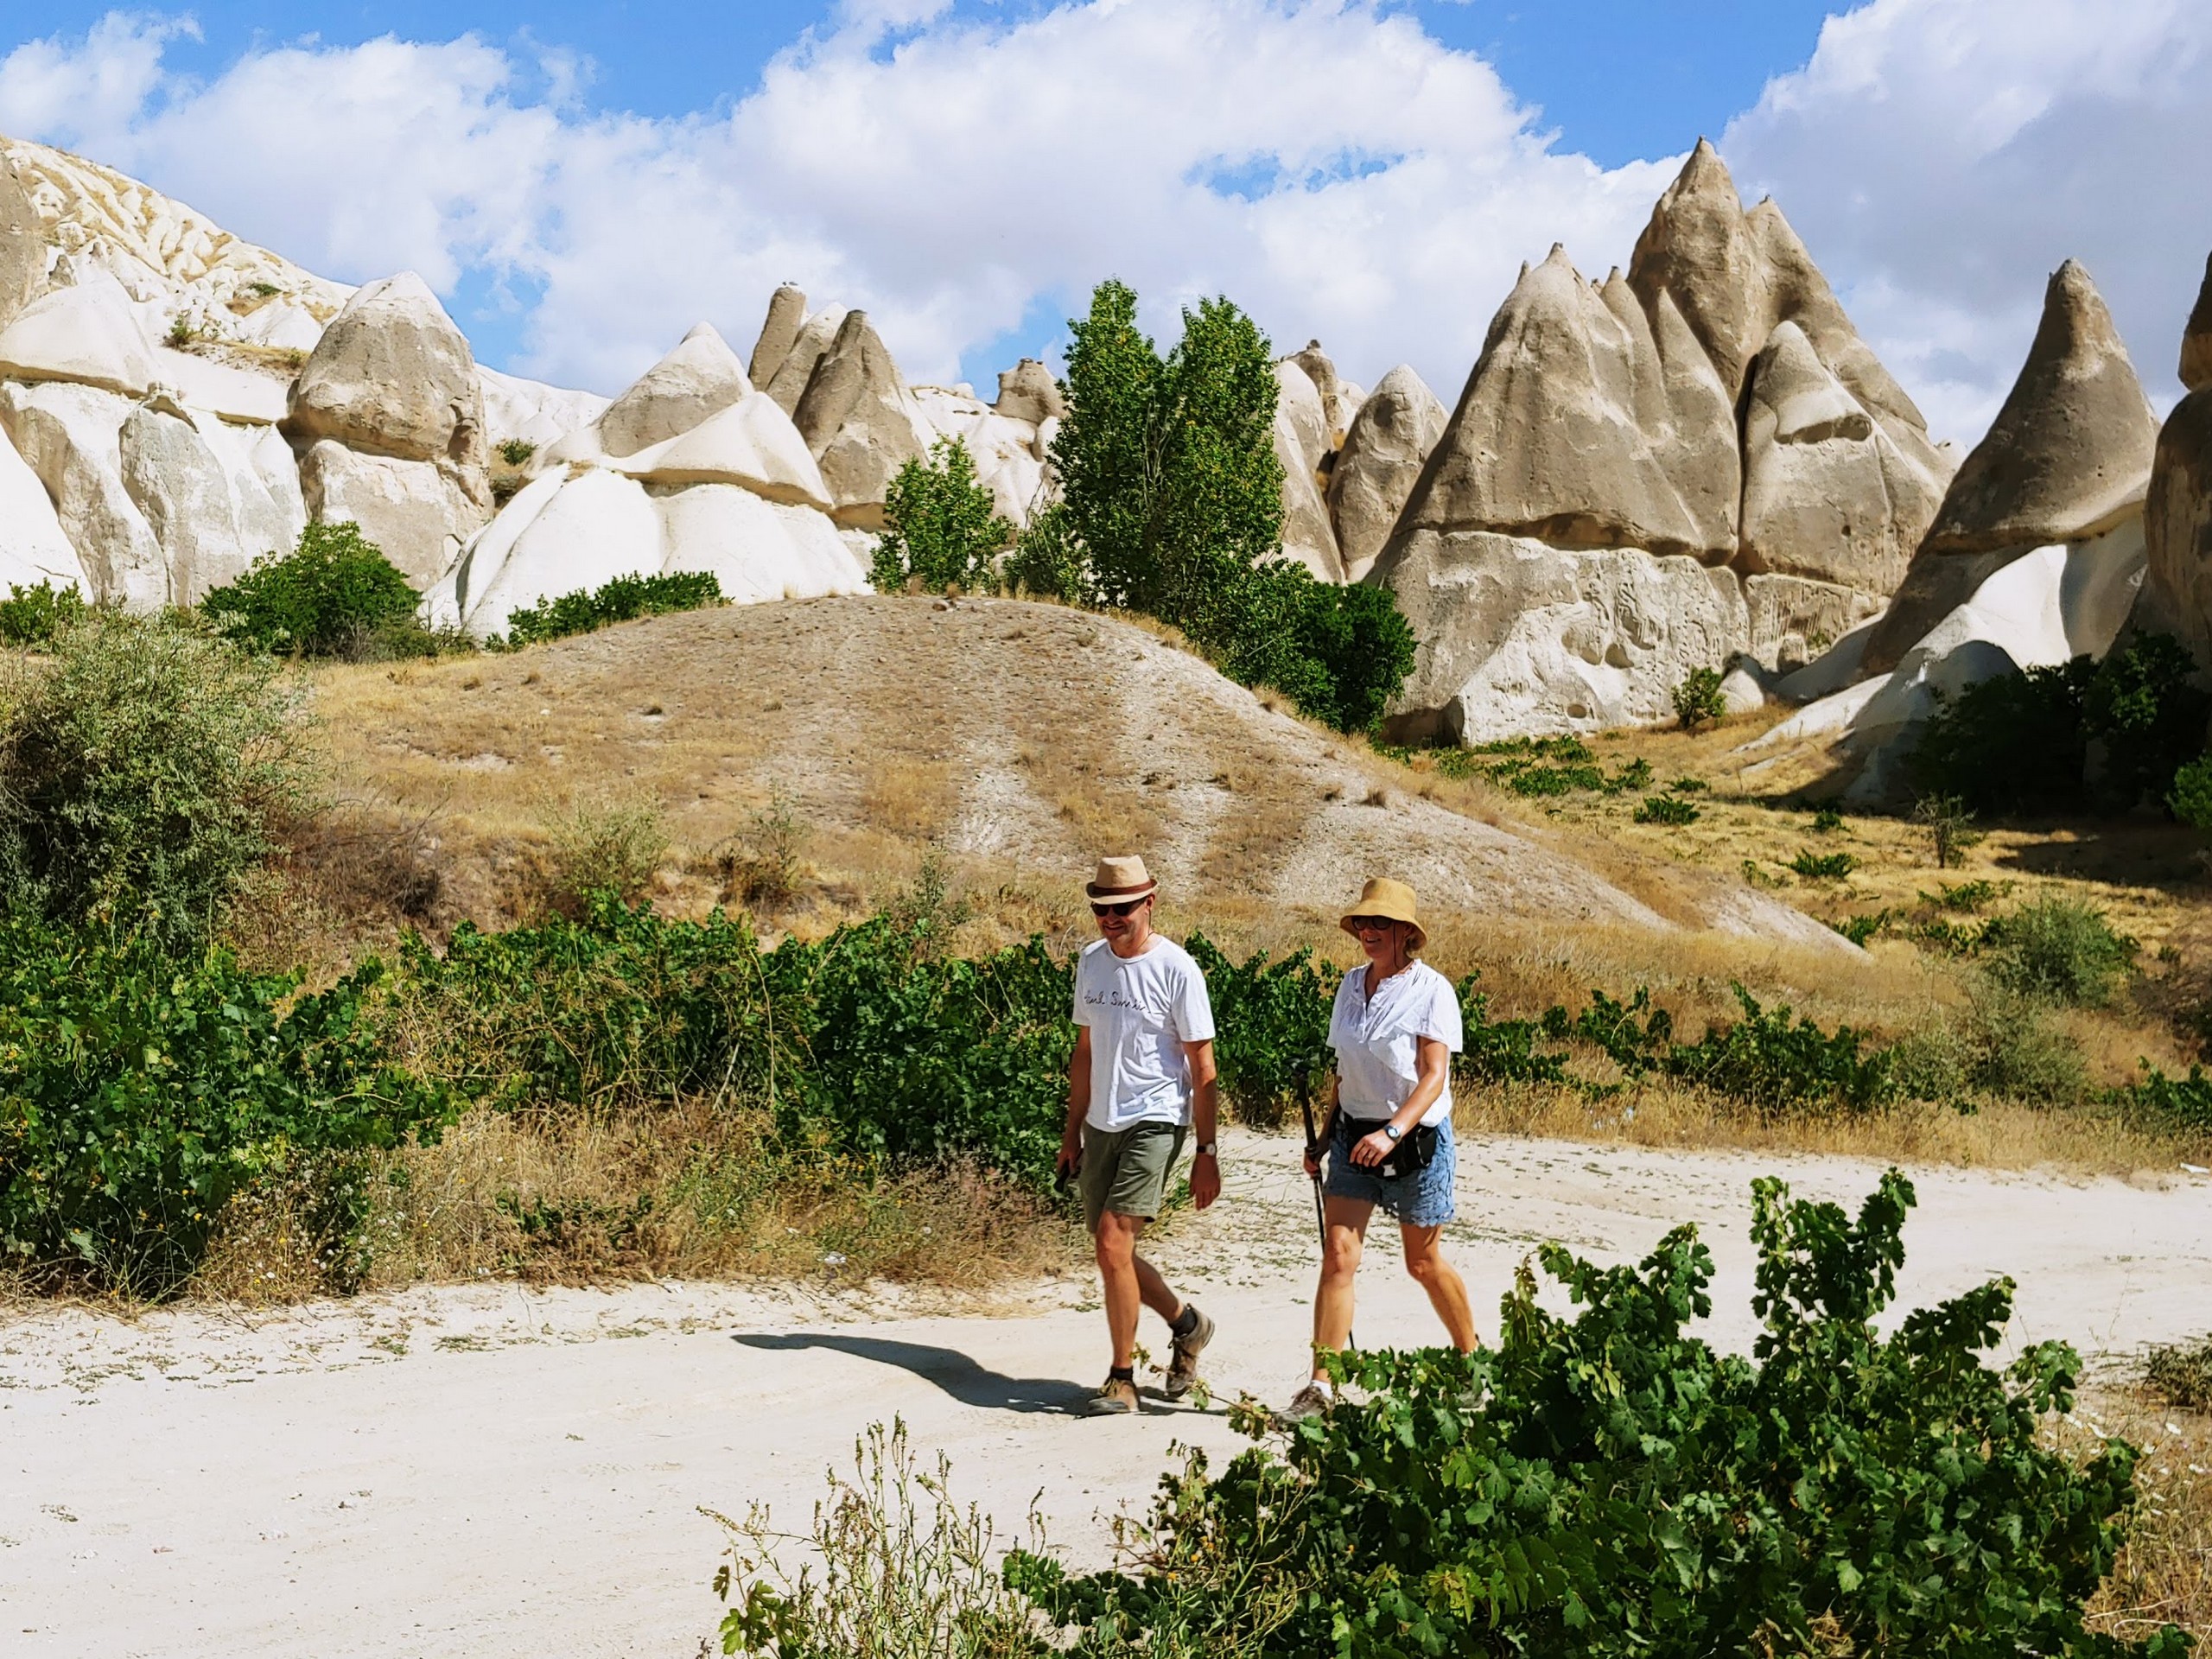 Two hikers exploring the Cappadocian rock formations